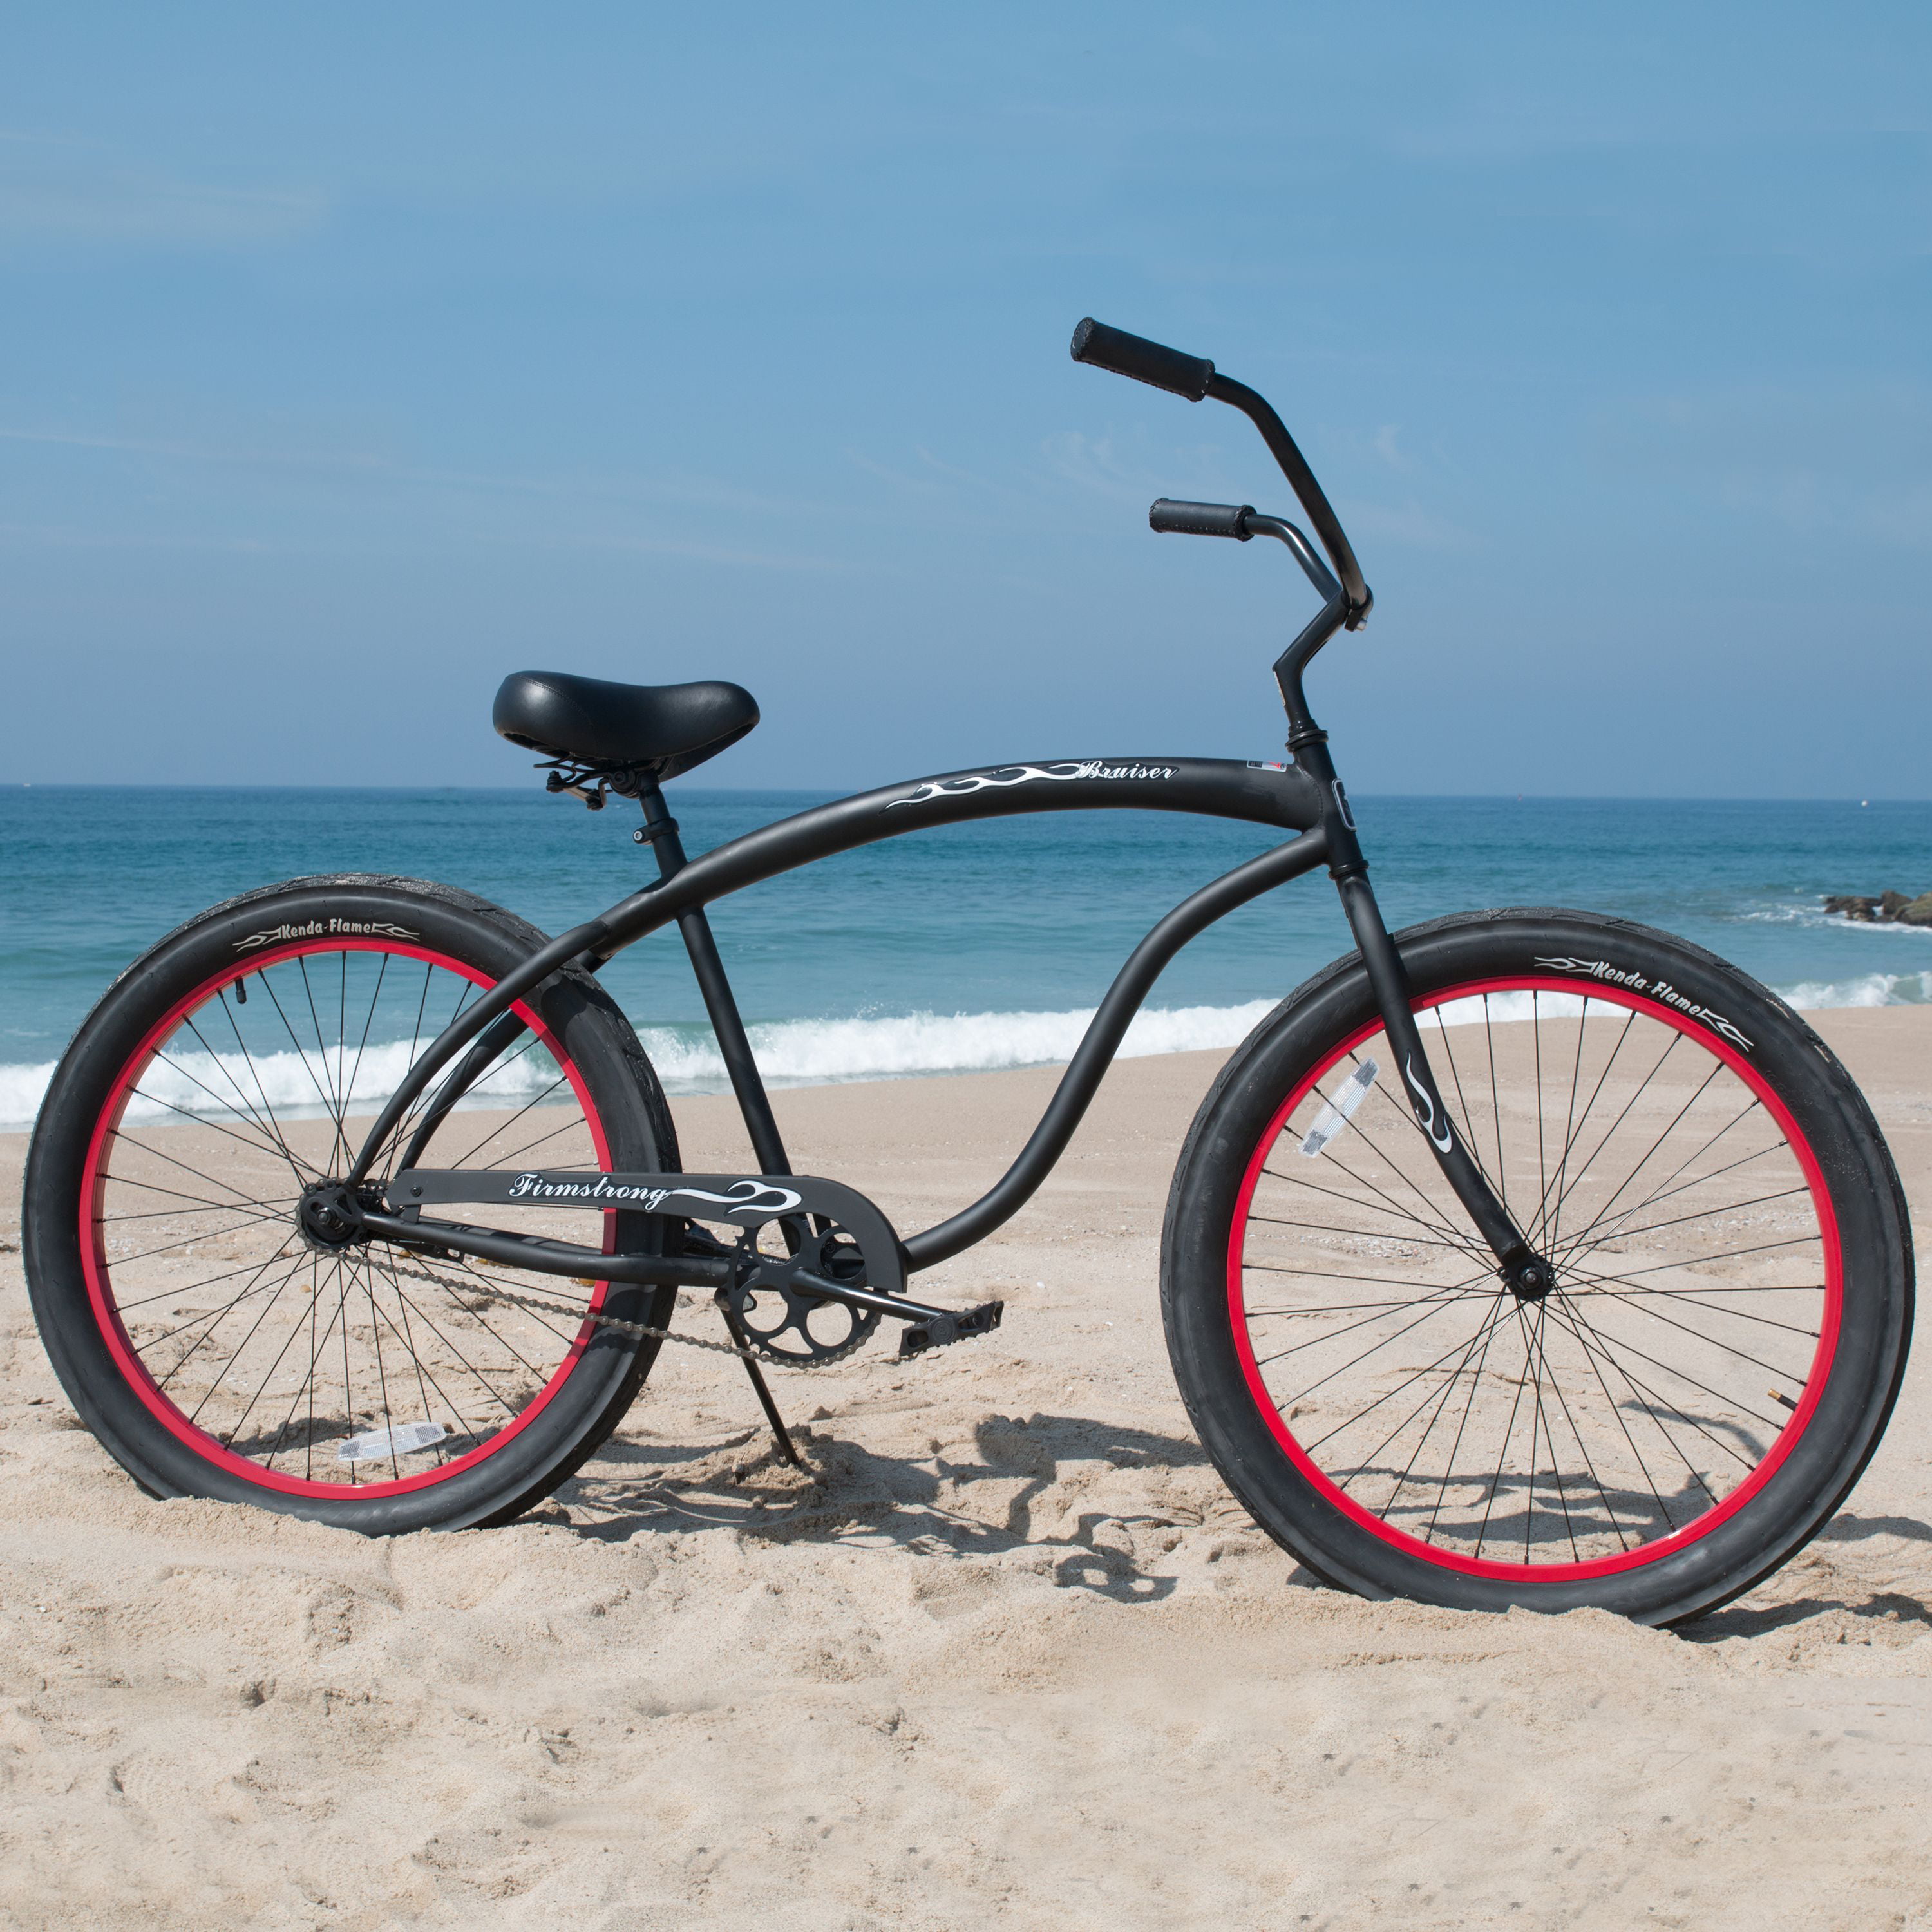 firmstrong bruiser man beach cruiser bicycle